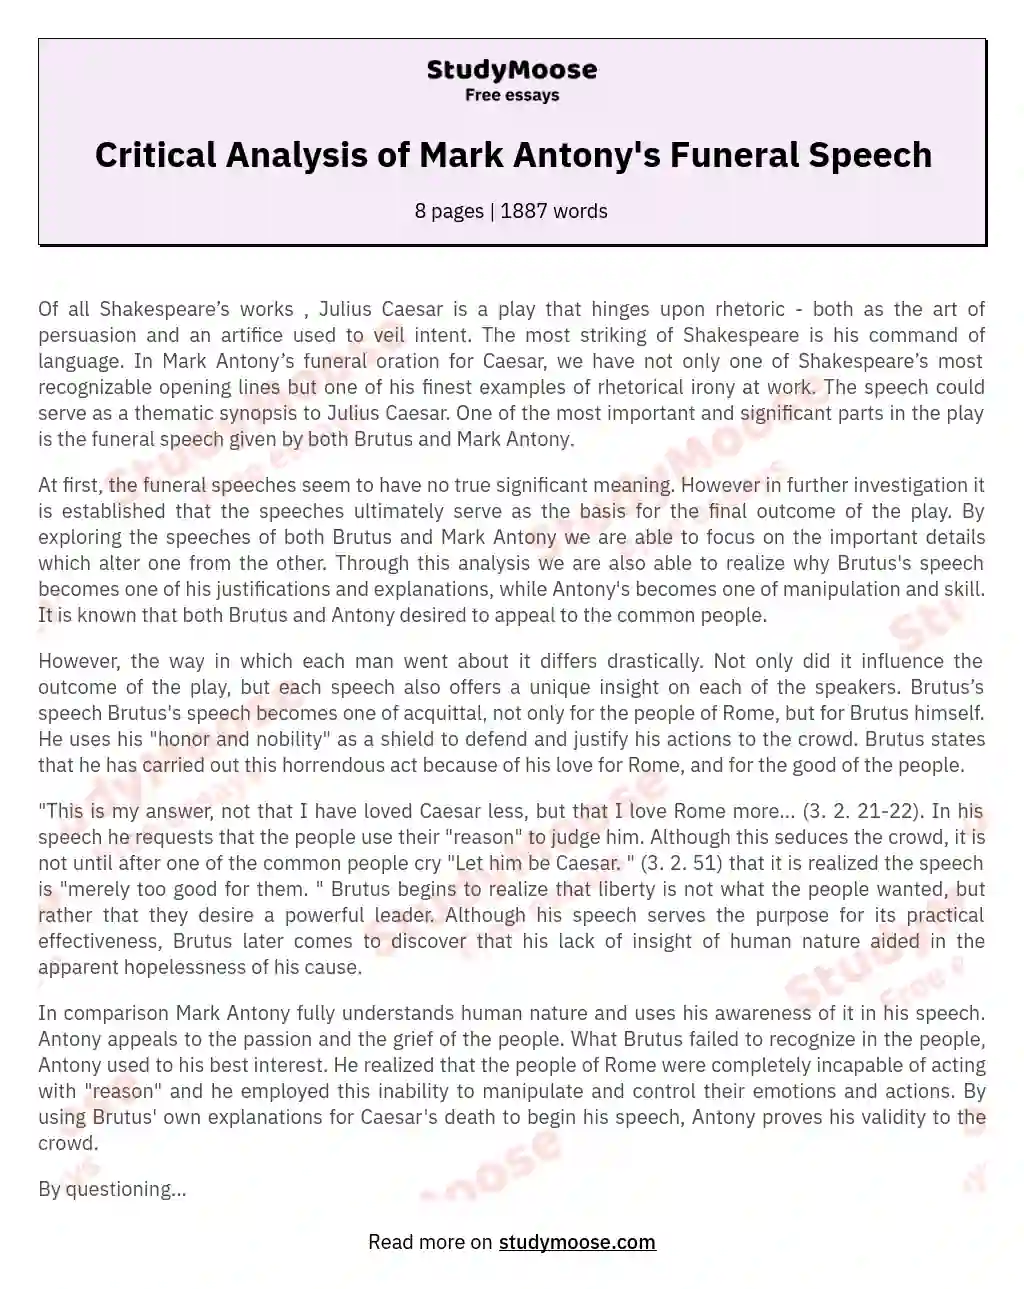 Critical Analysis of Mark Antony's Funeral Speech essay